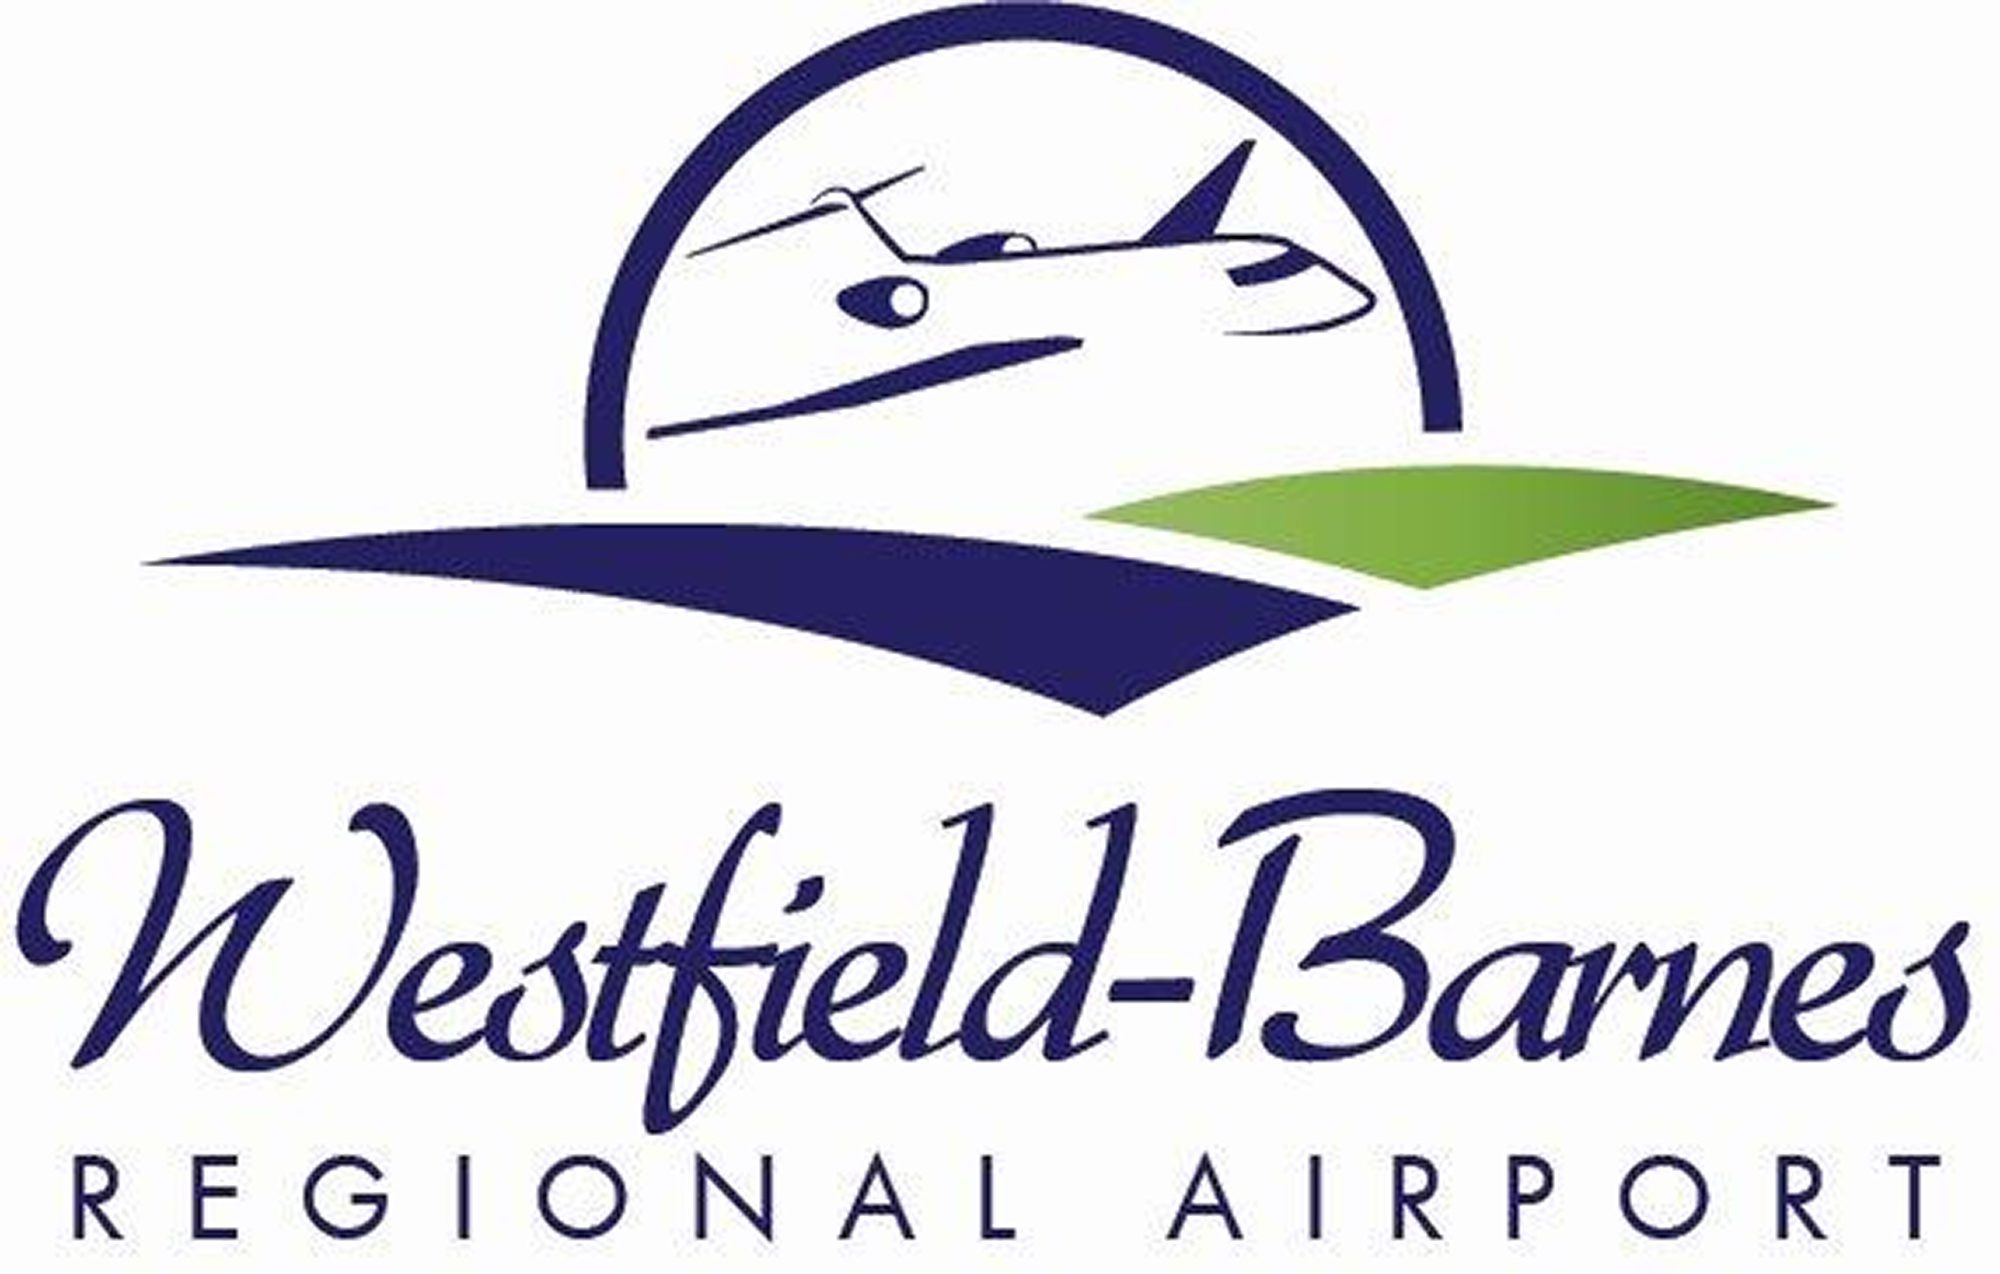 image of Westfield-Barnes Airport logo